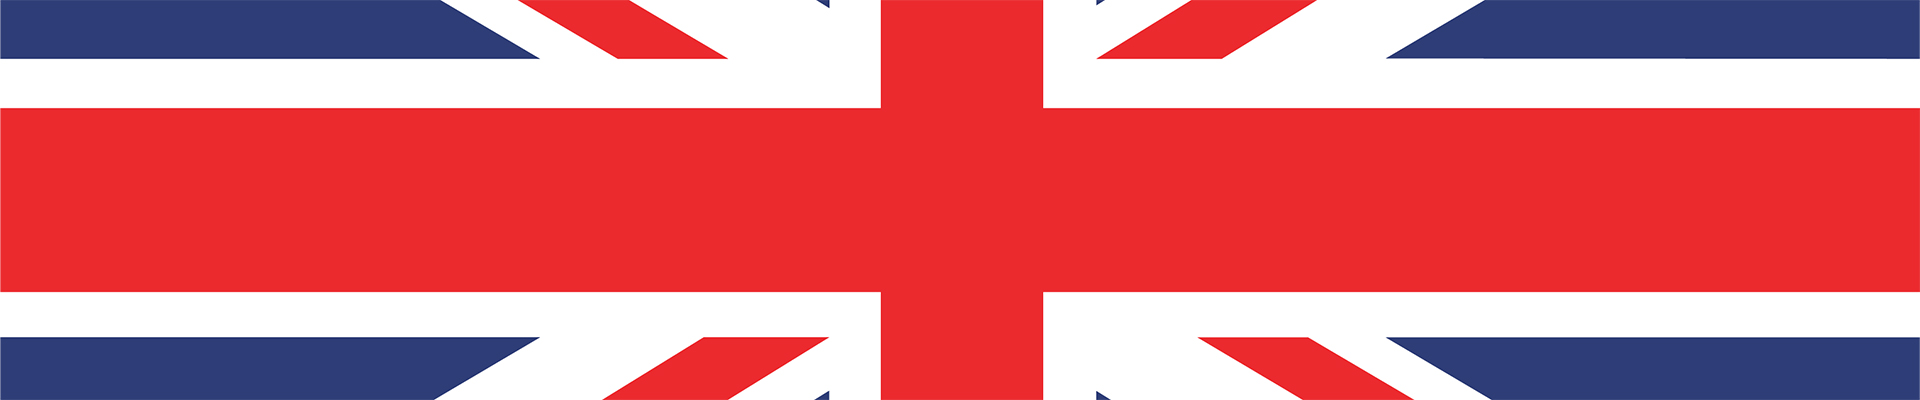 Alcaraz vs Djokovic en direct – drapeau britannique